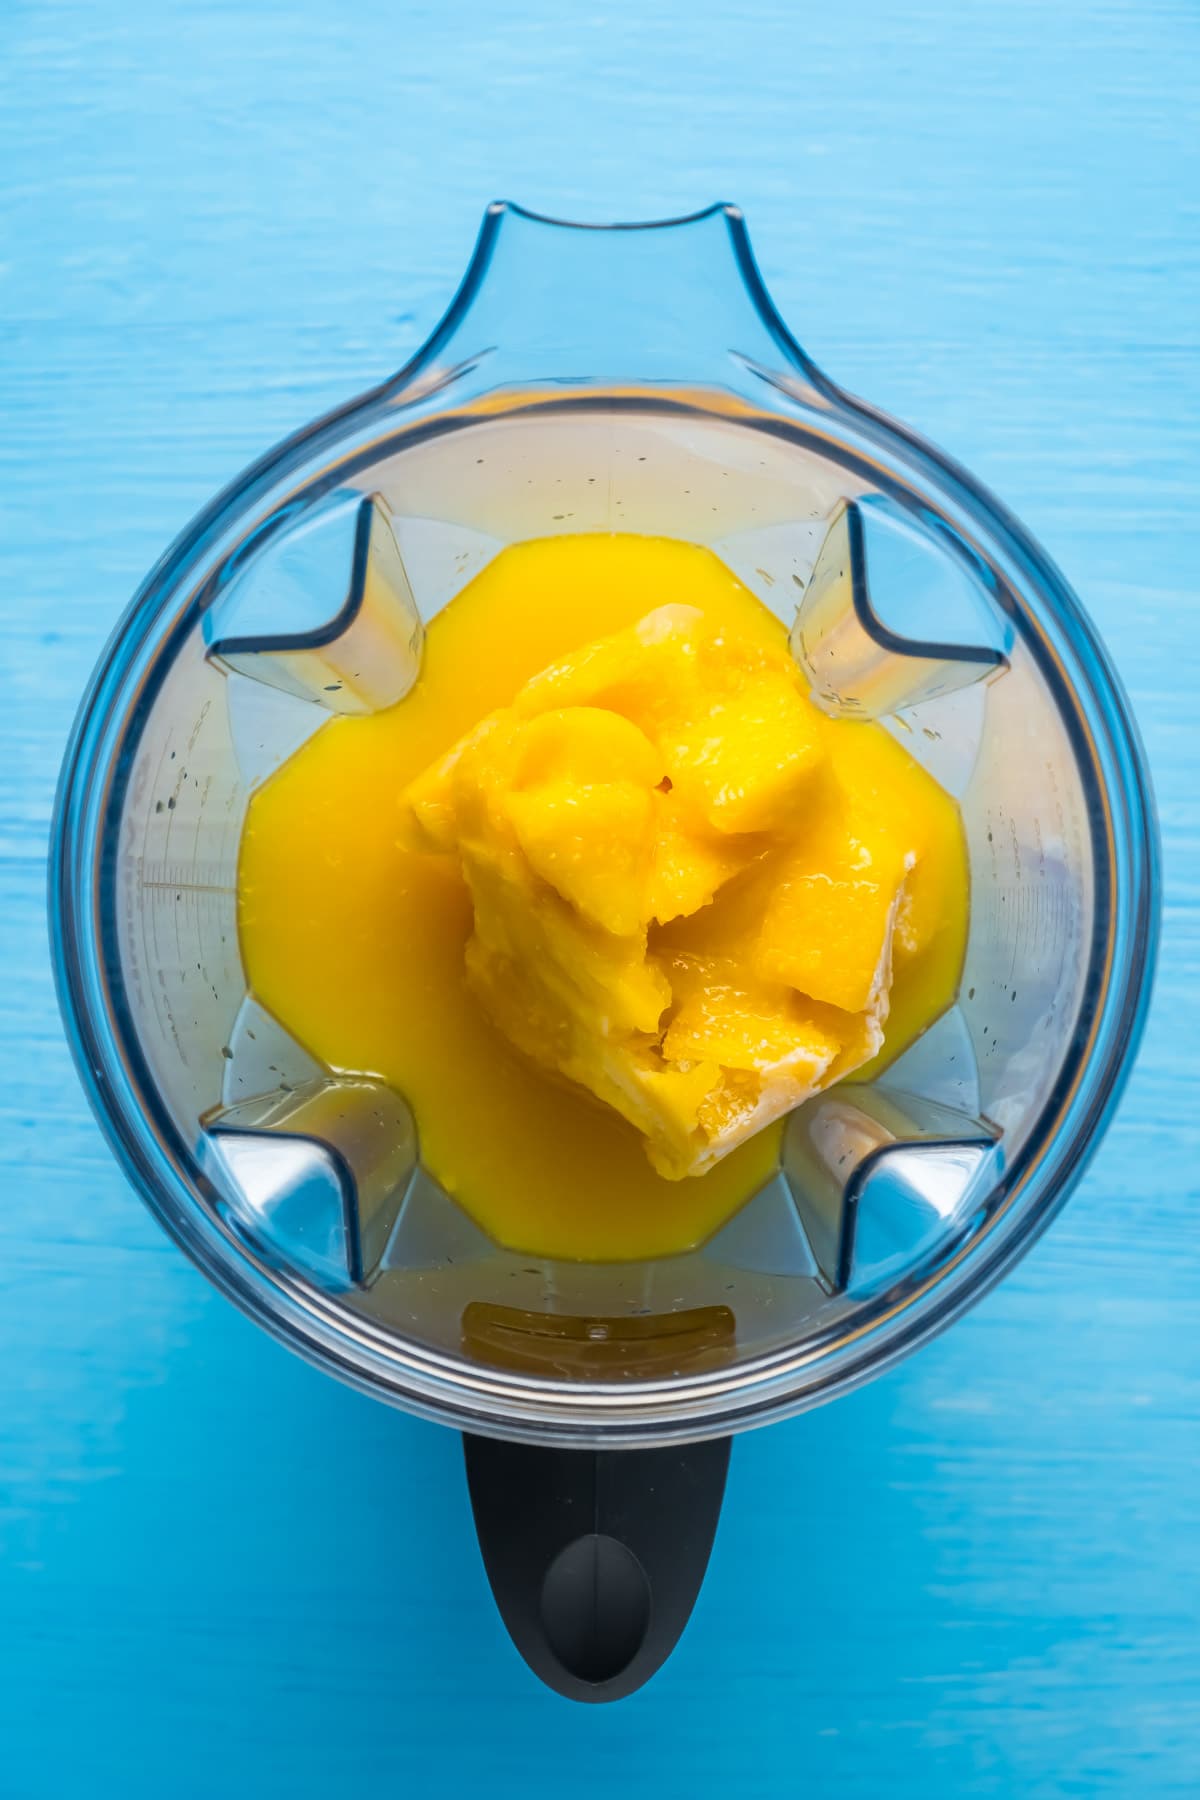 Ingredients for mango orange smoothie added to blender.